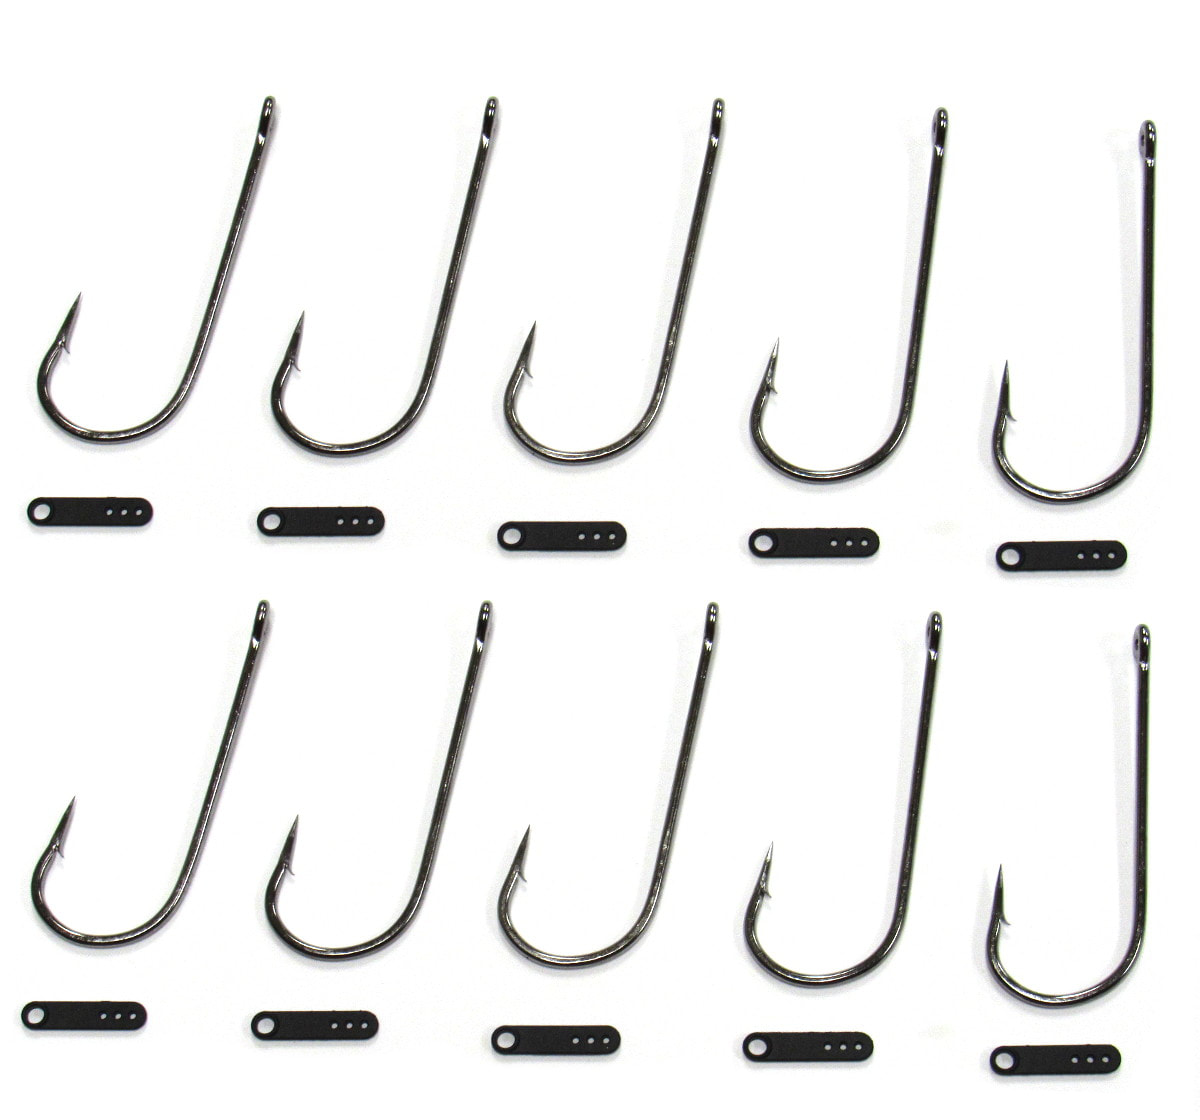 Razor Series Flipping Hooks w/ Bait Straps